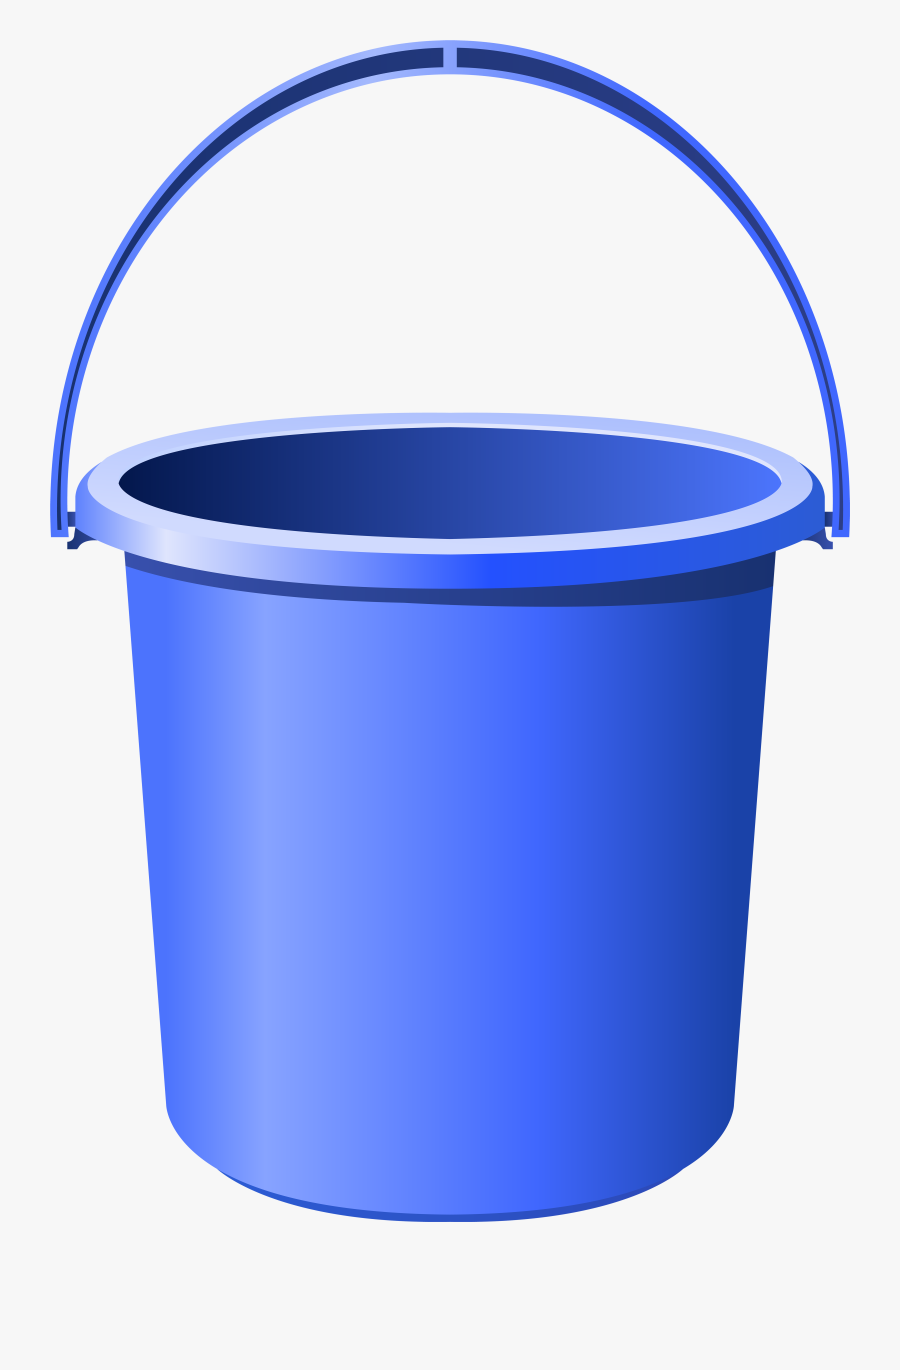 Blue Bucket Png Clip Art Image - Bathtub, Transparent Clipart